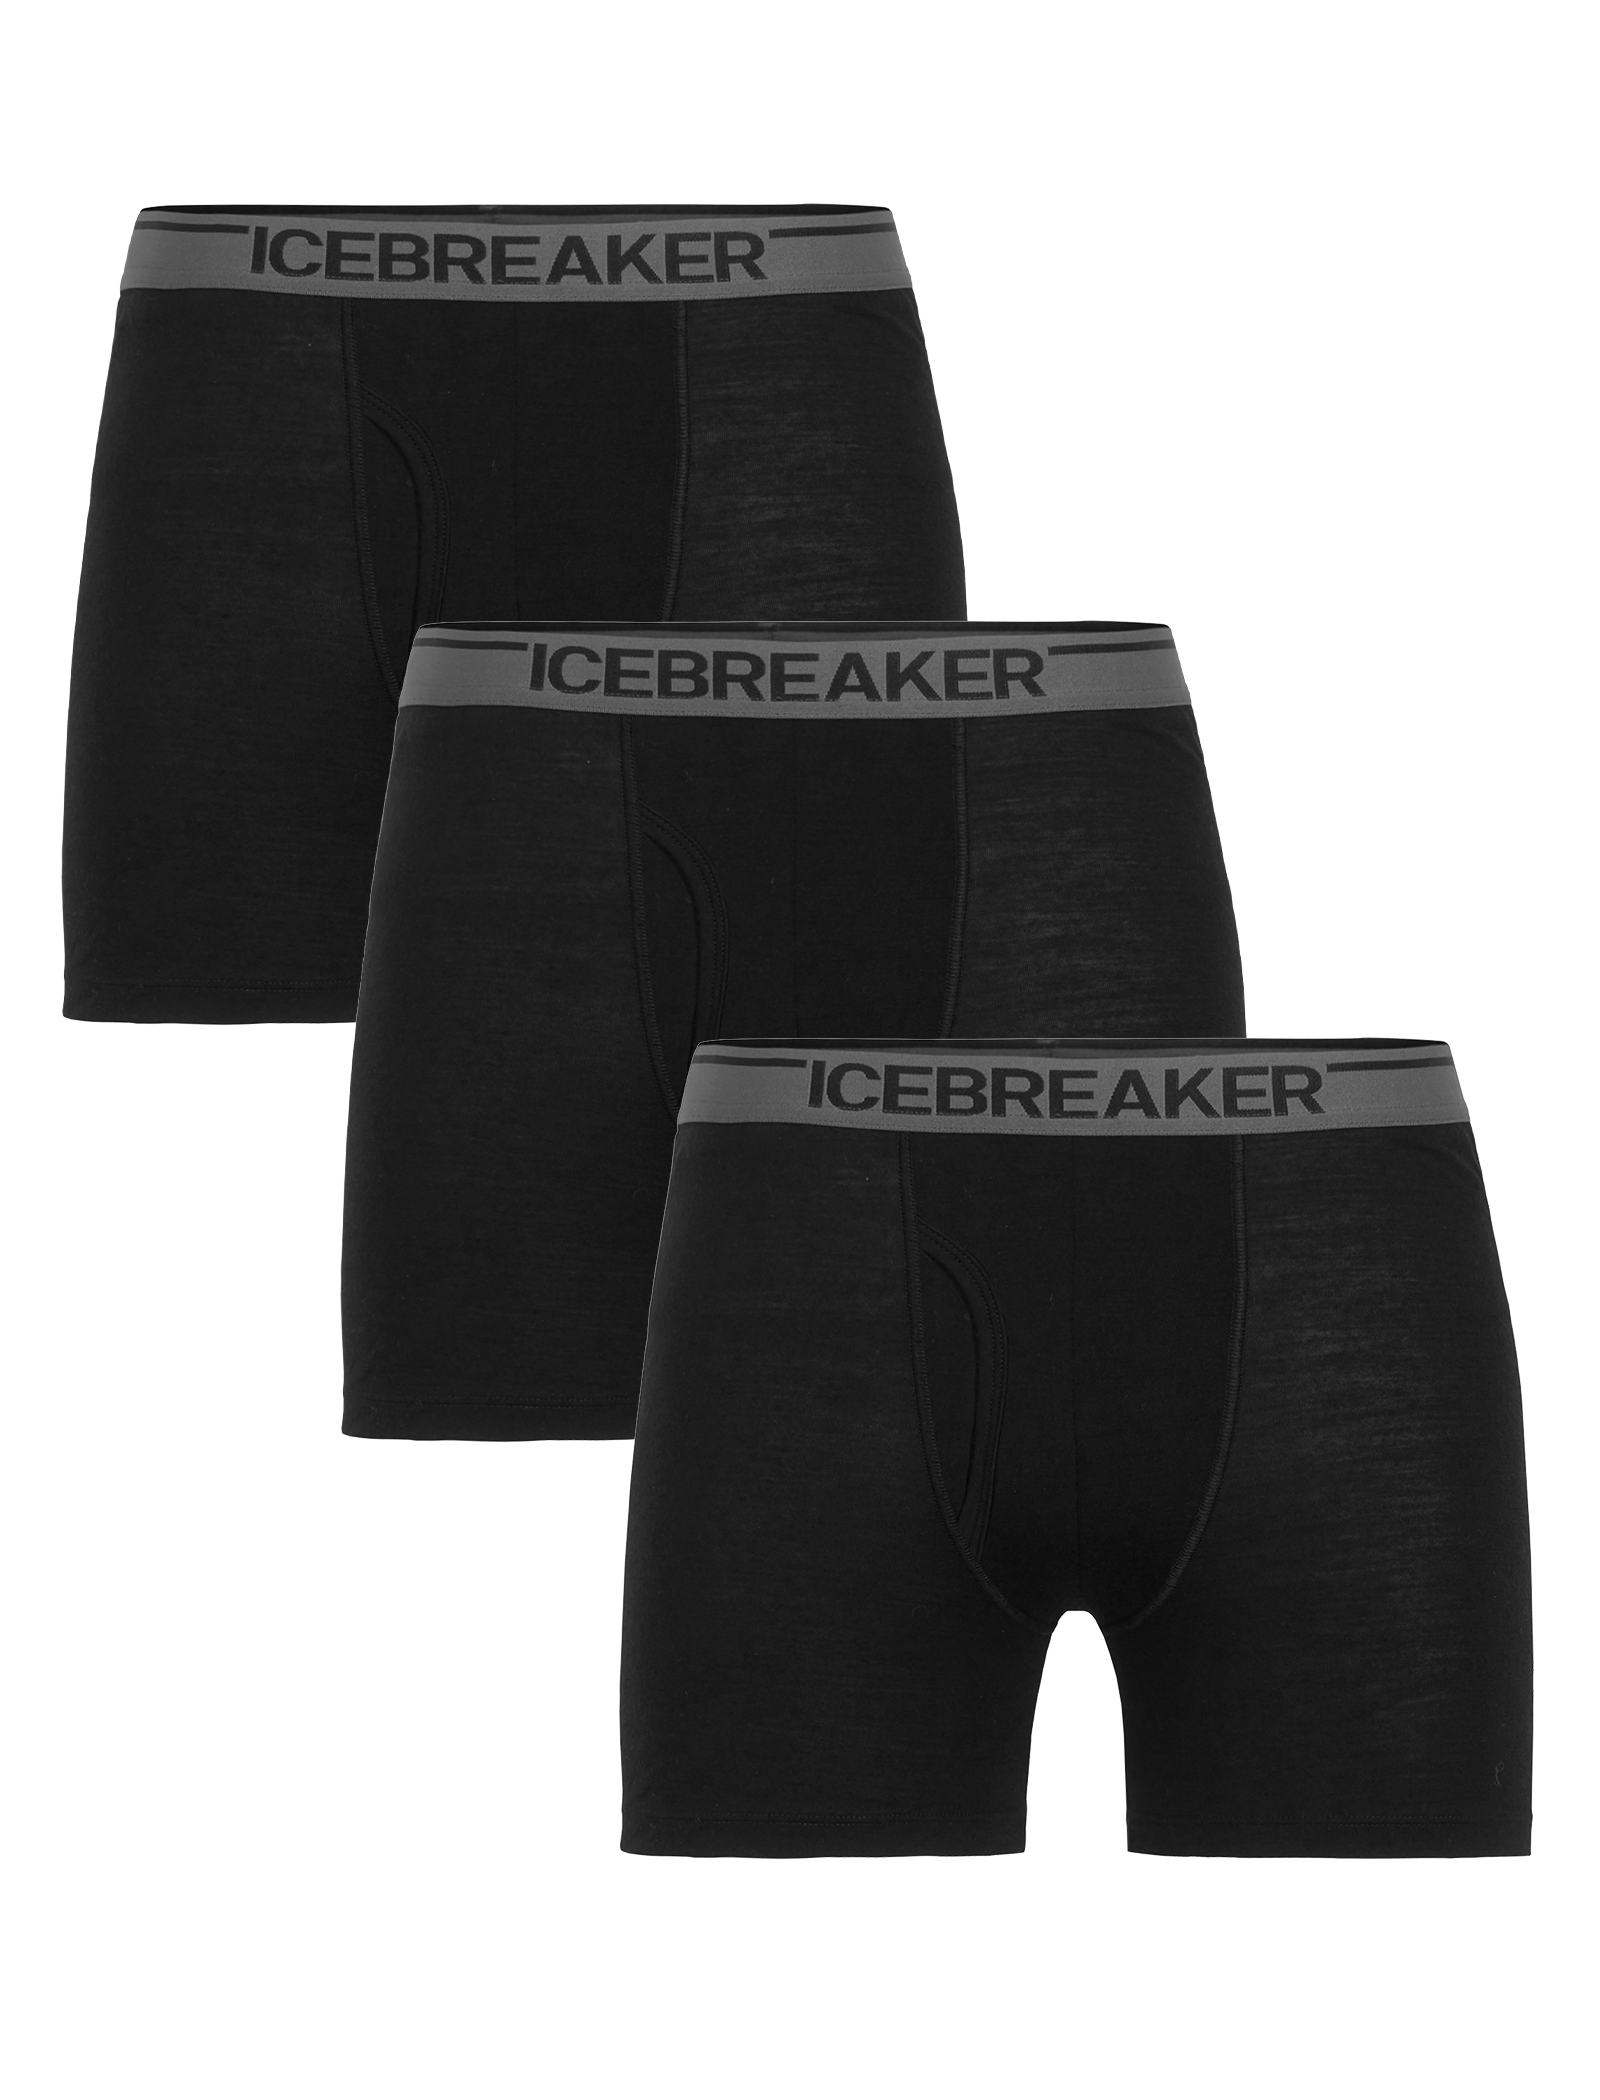 Icebreaker Mens Anatomica Boxers Underwear